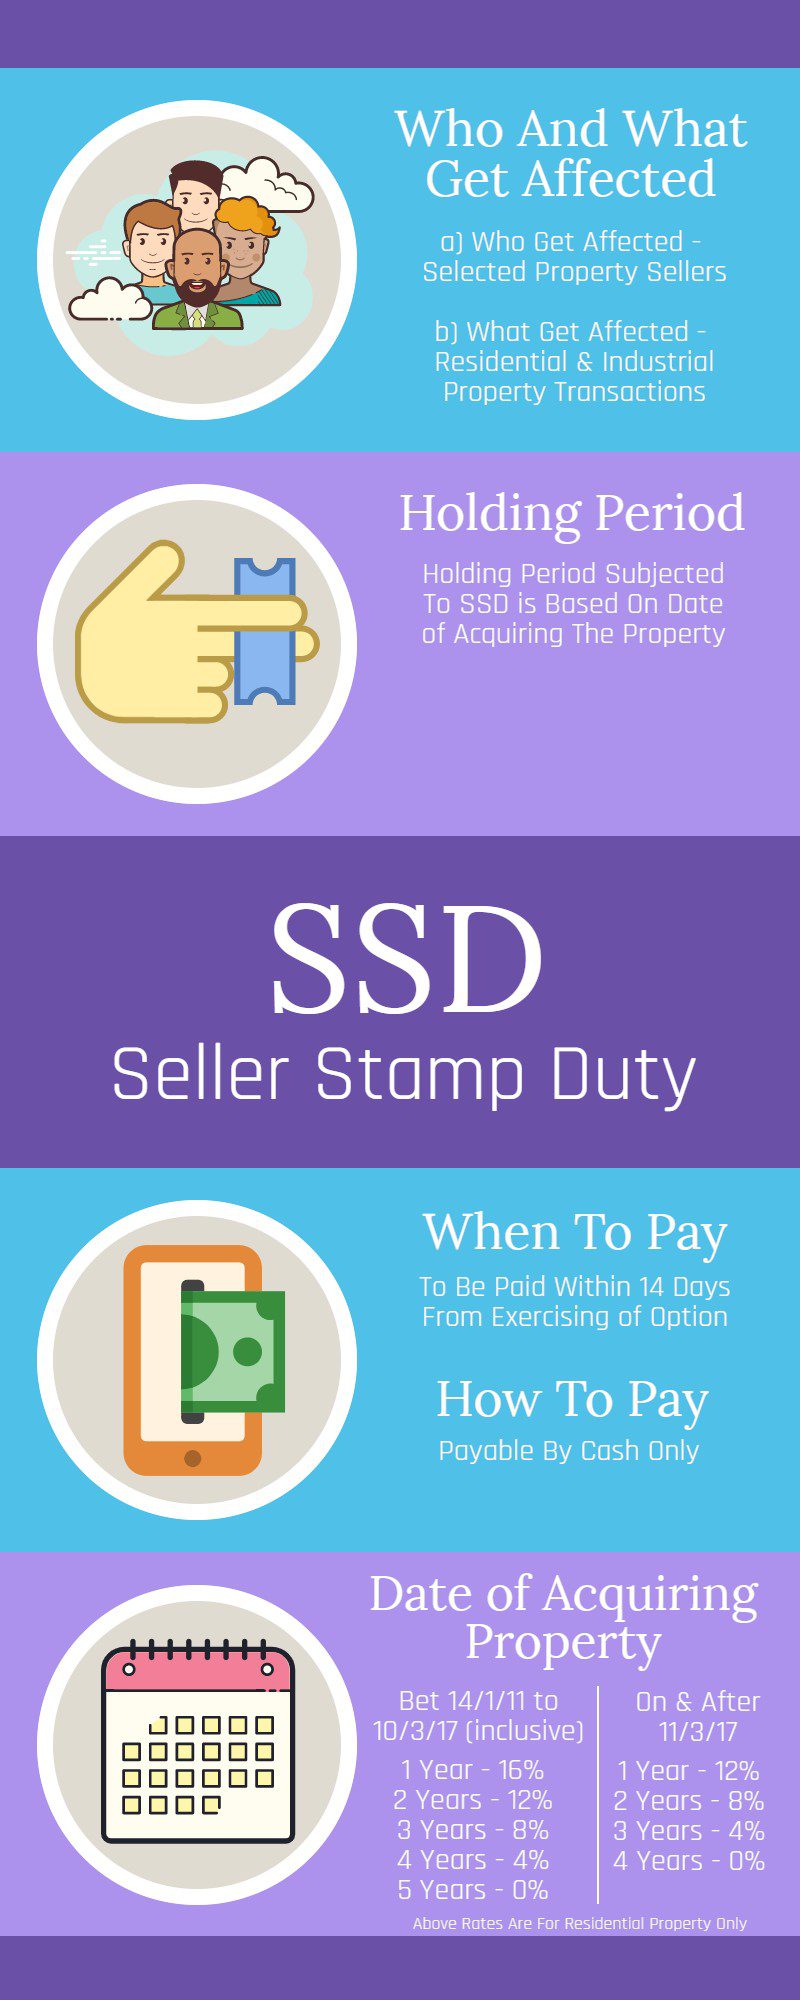 Seller Stamp Duty (SSD)